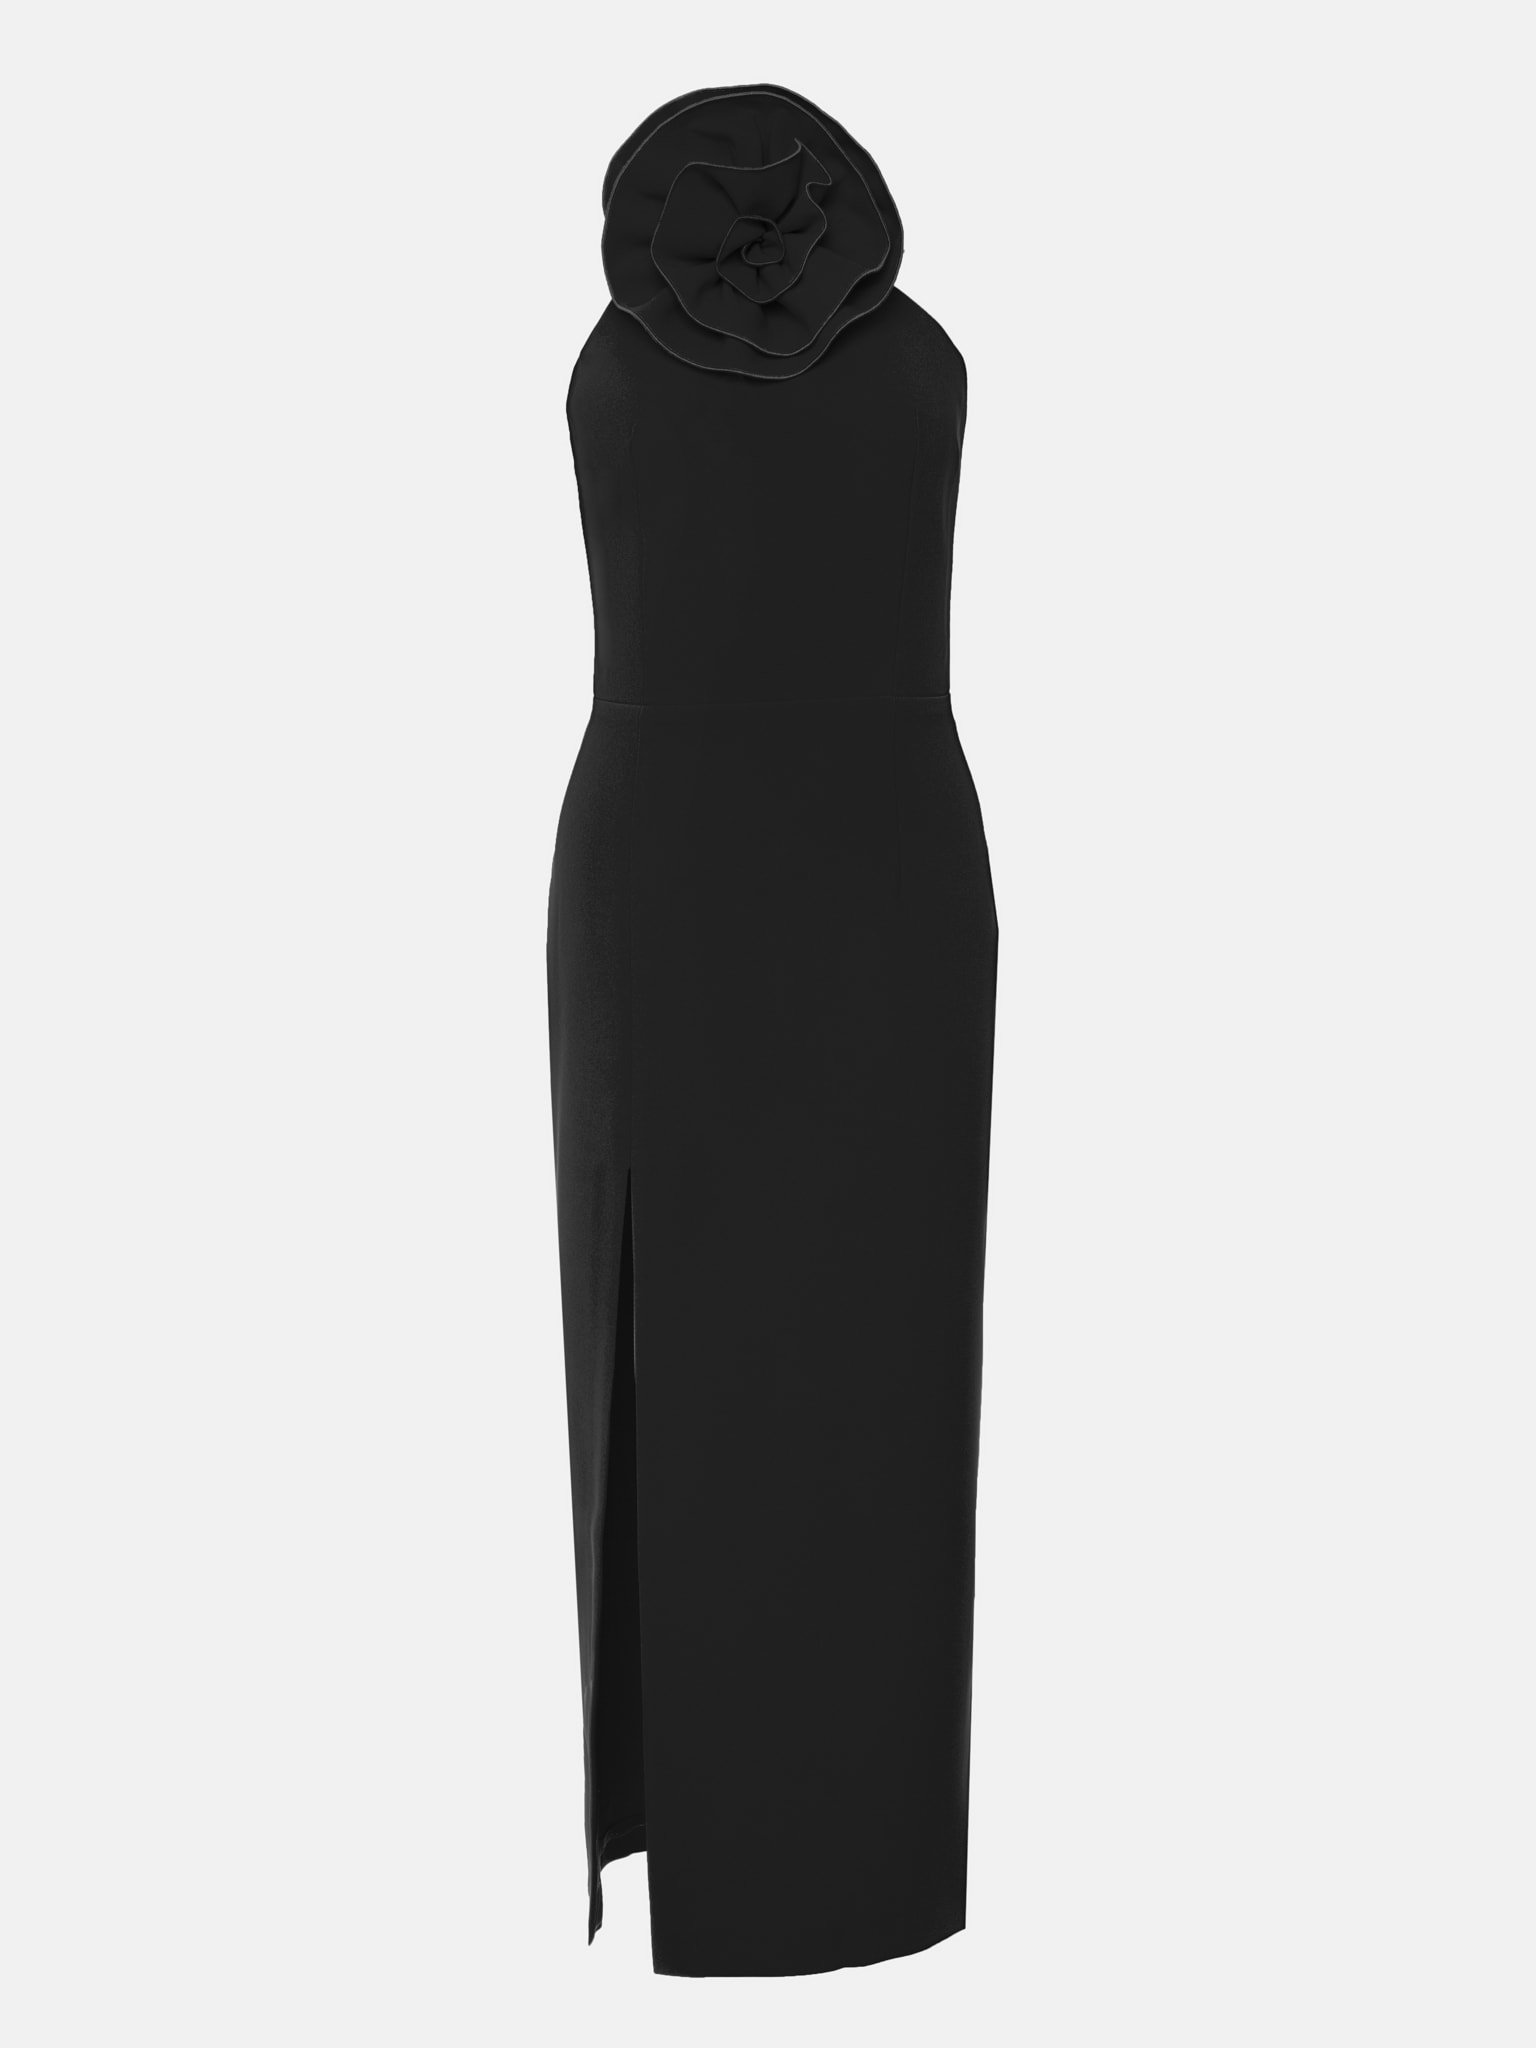 LICHI - Online fashion store :: Skinny-strap midi dress with flower brooch